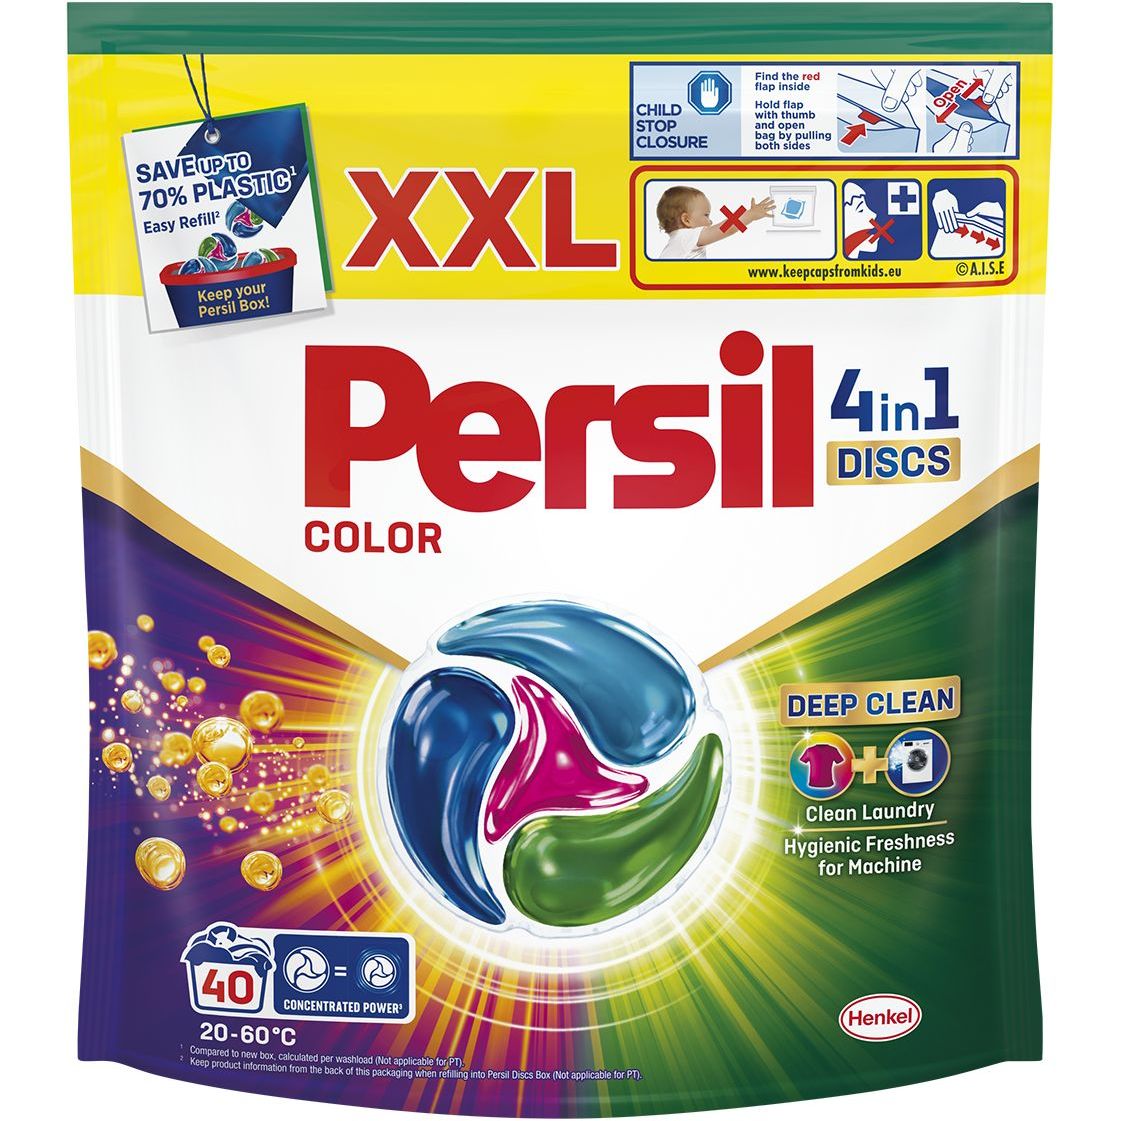 Диски для стирки Persil Deep Clean Color 4 in 1 Discs 40 шт. - фото 1